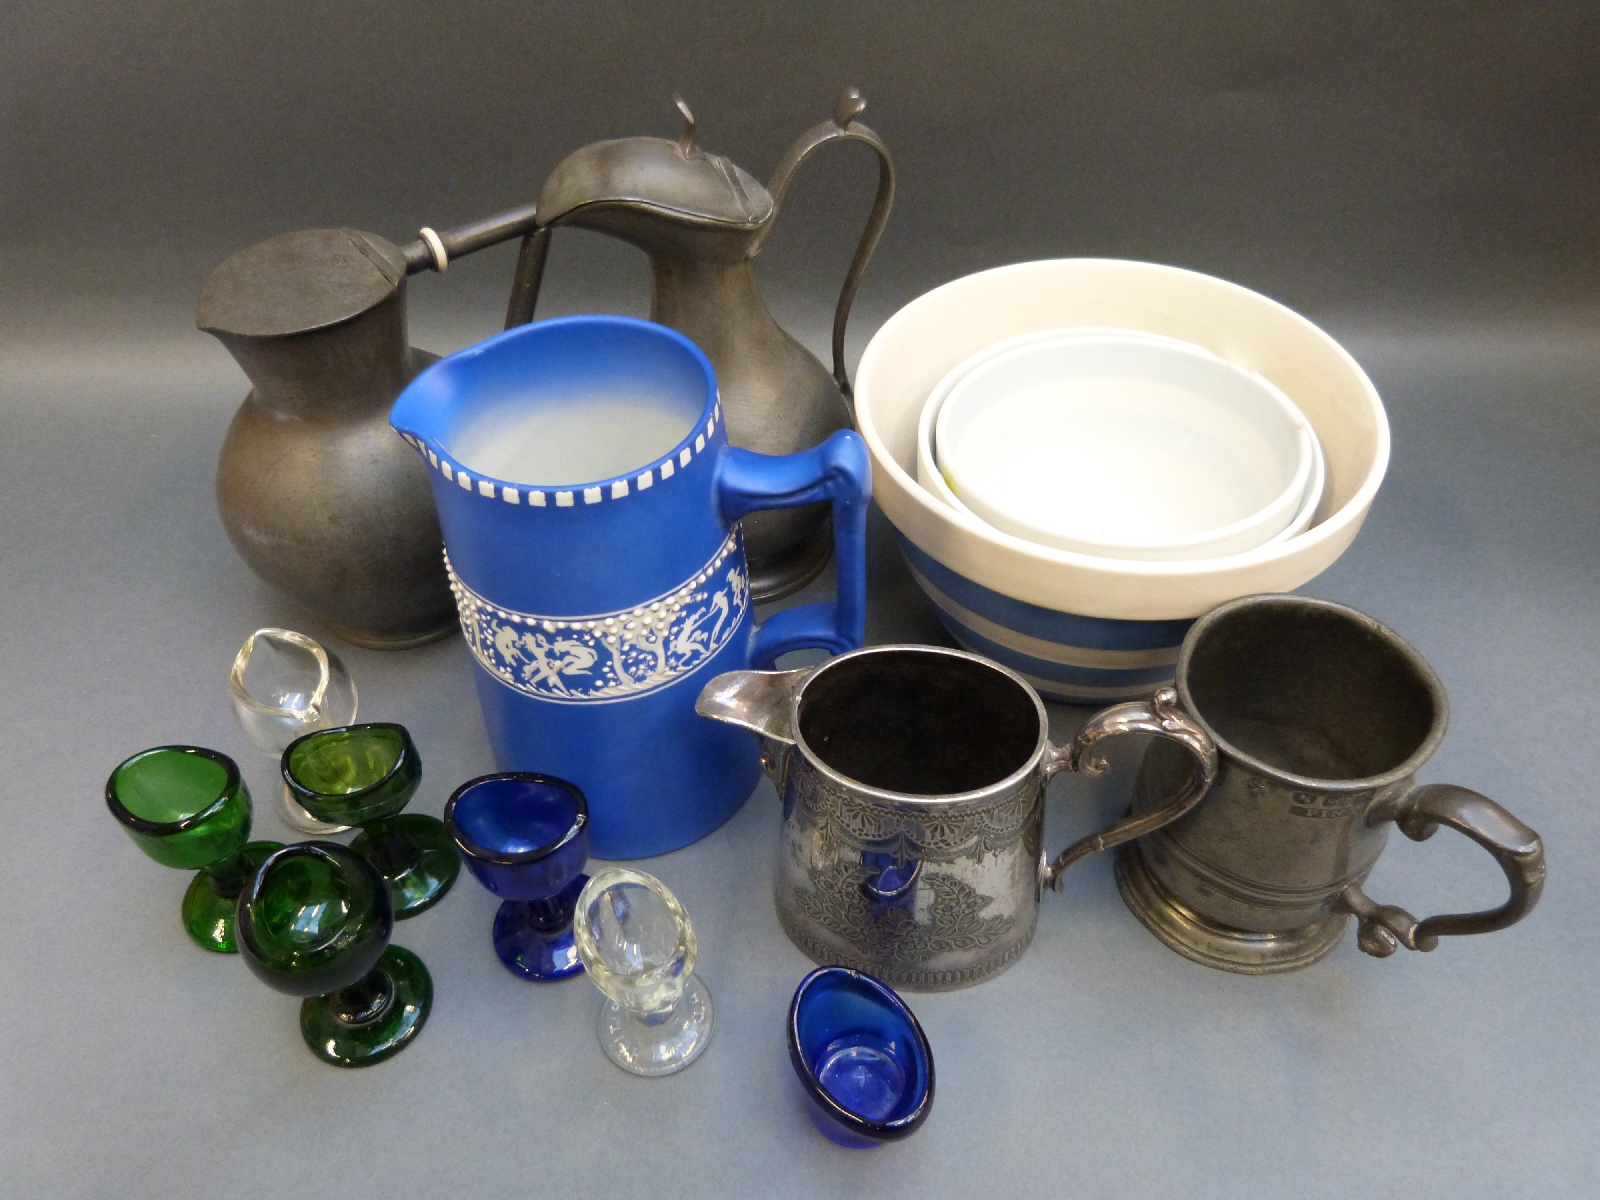 T G Green bowls, Tams jug, pewter items, - Image 2 of 2